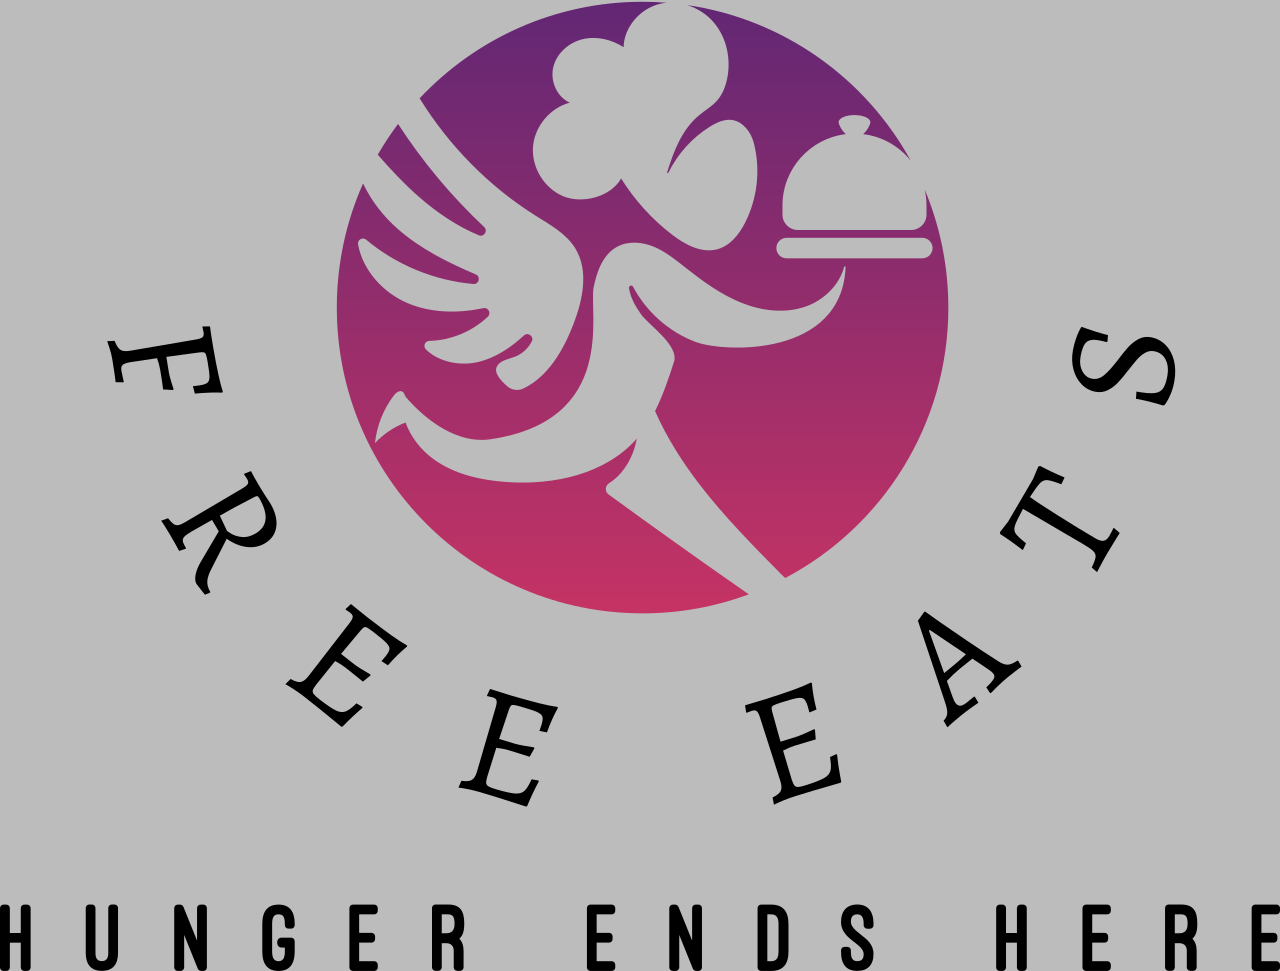 FREE EATS's logo